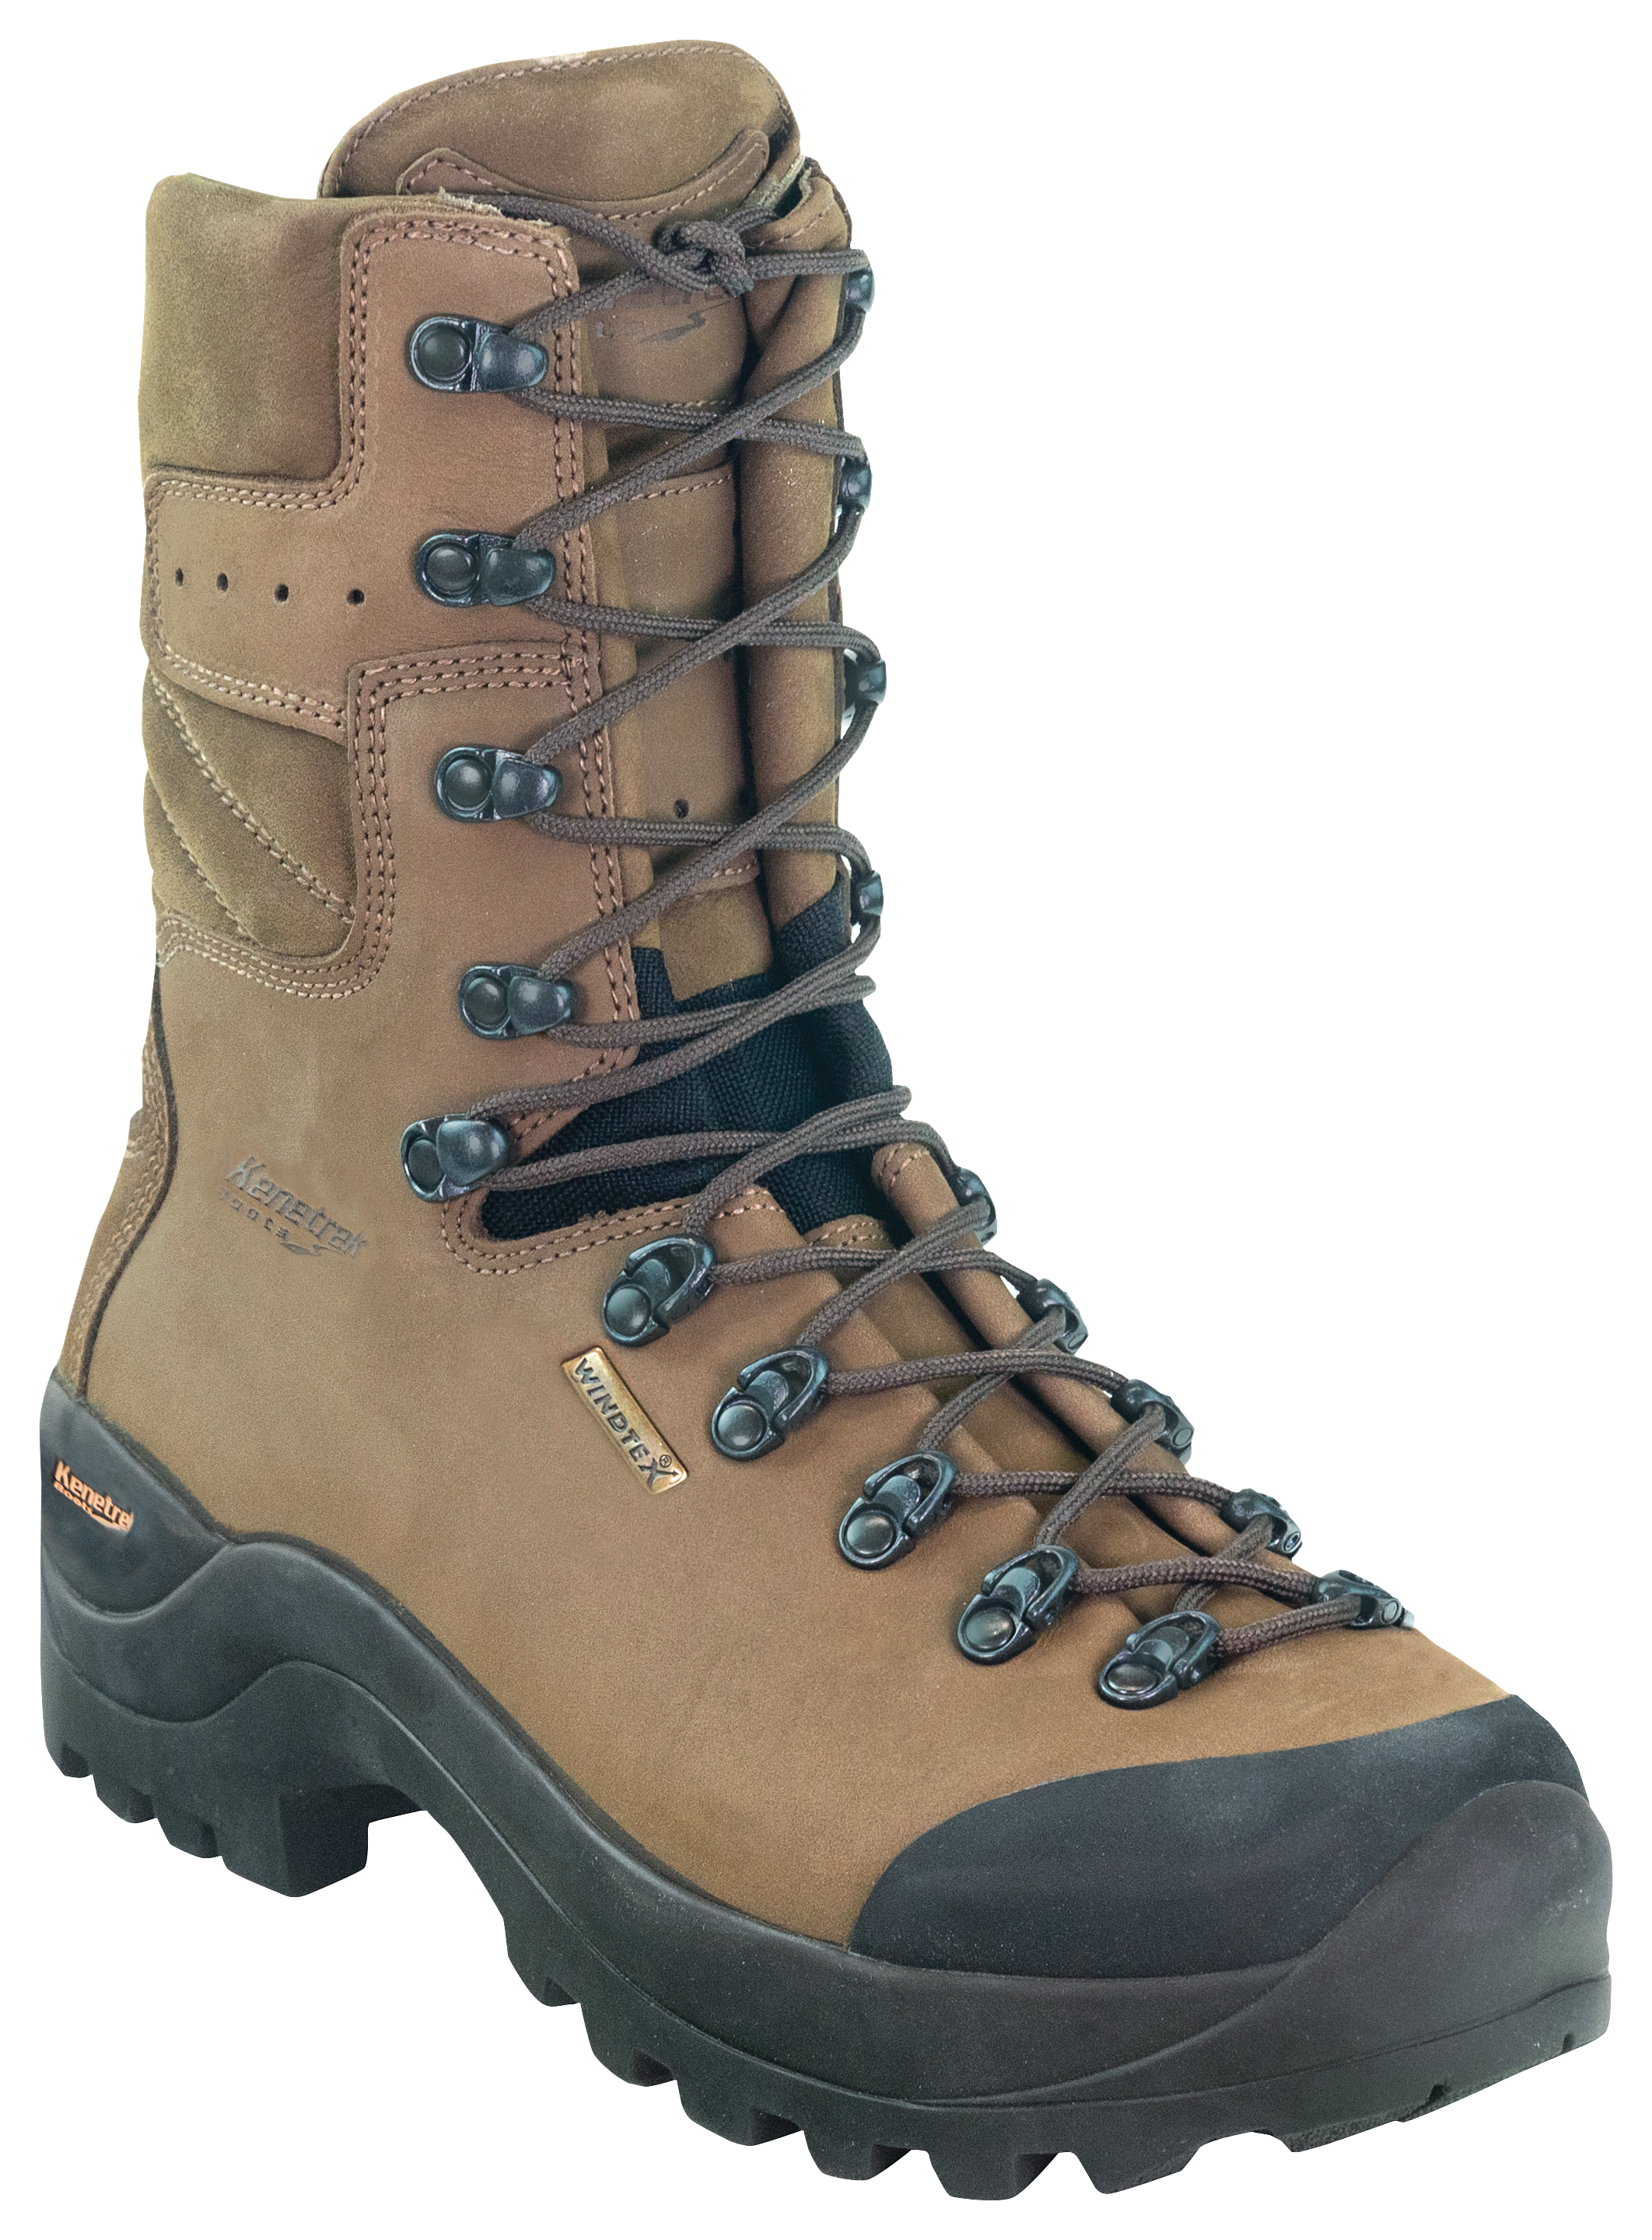 Kenetrek Mountain Guide Waterproof Hunting Boots for Men - Brown - 10W